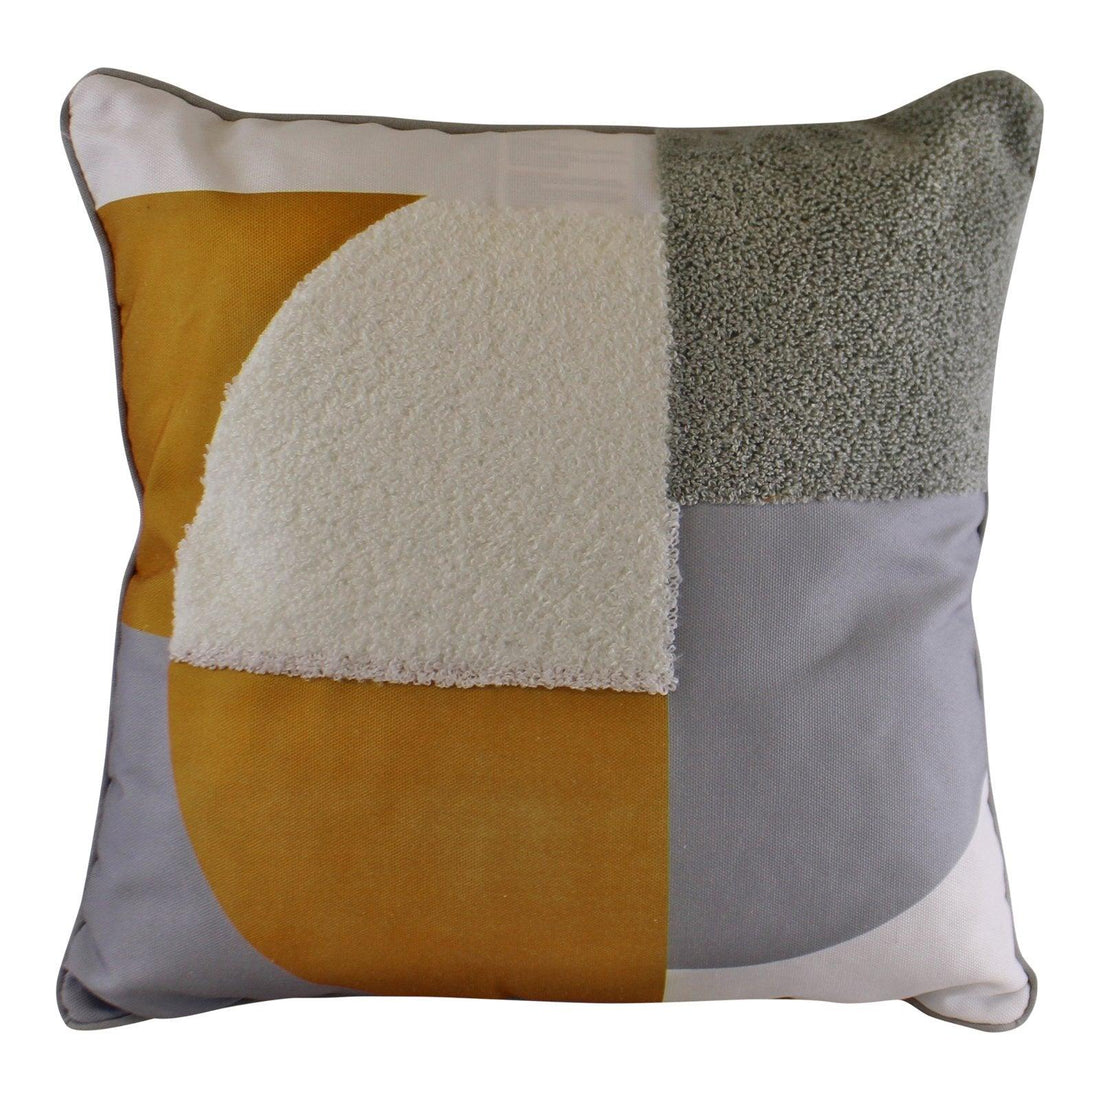 Abstract Design Textured Cushion, Design A - £26.99 - Throw Pillows 